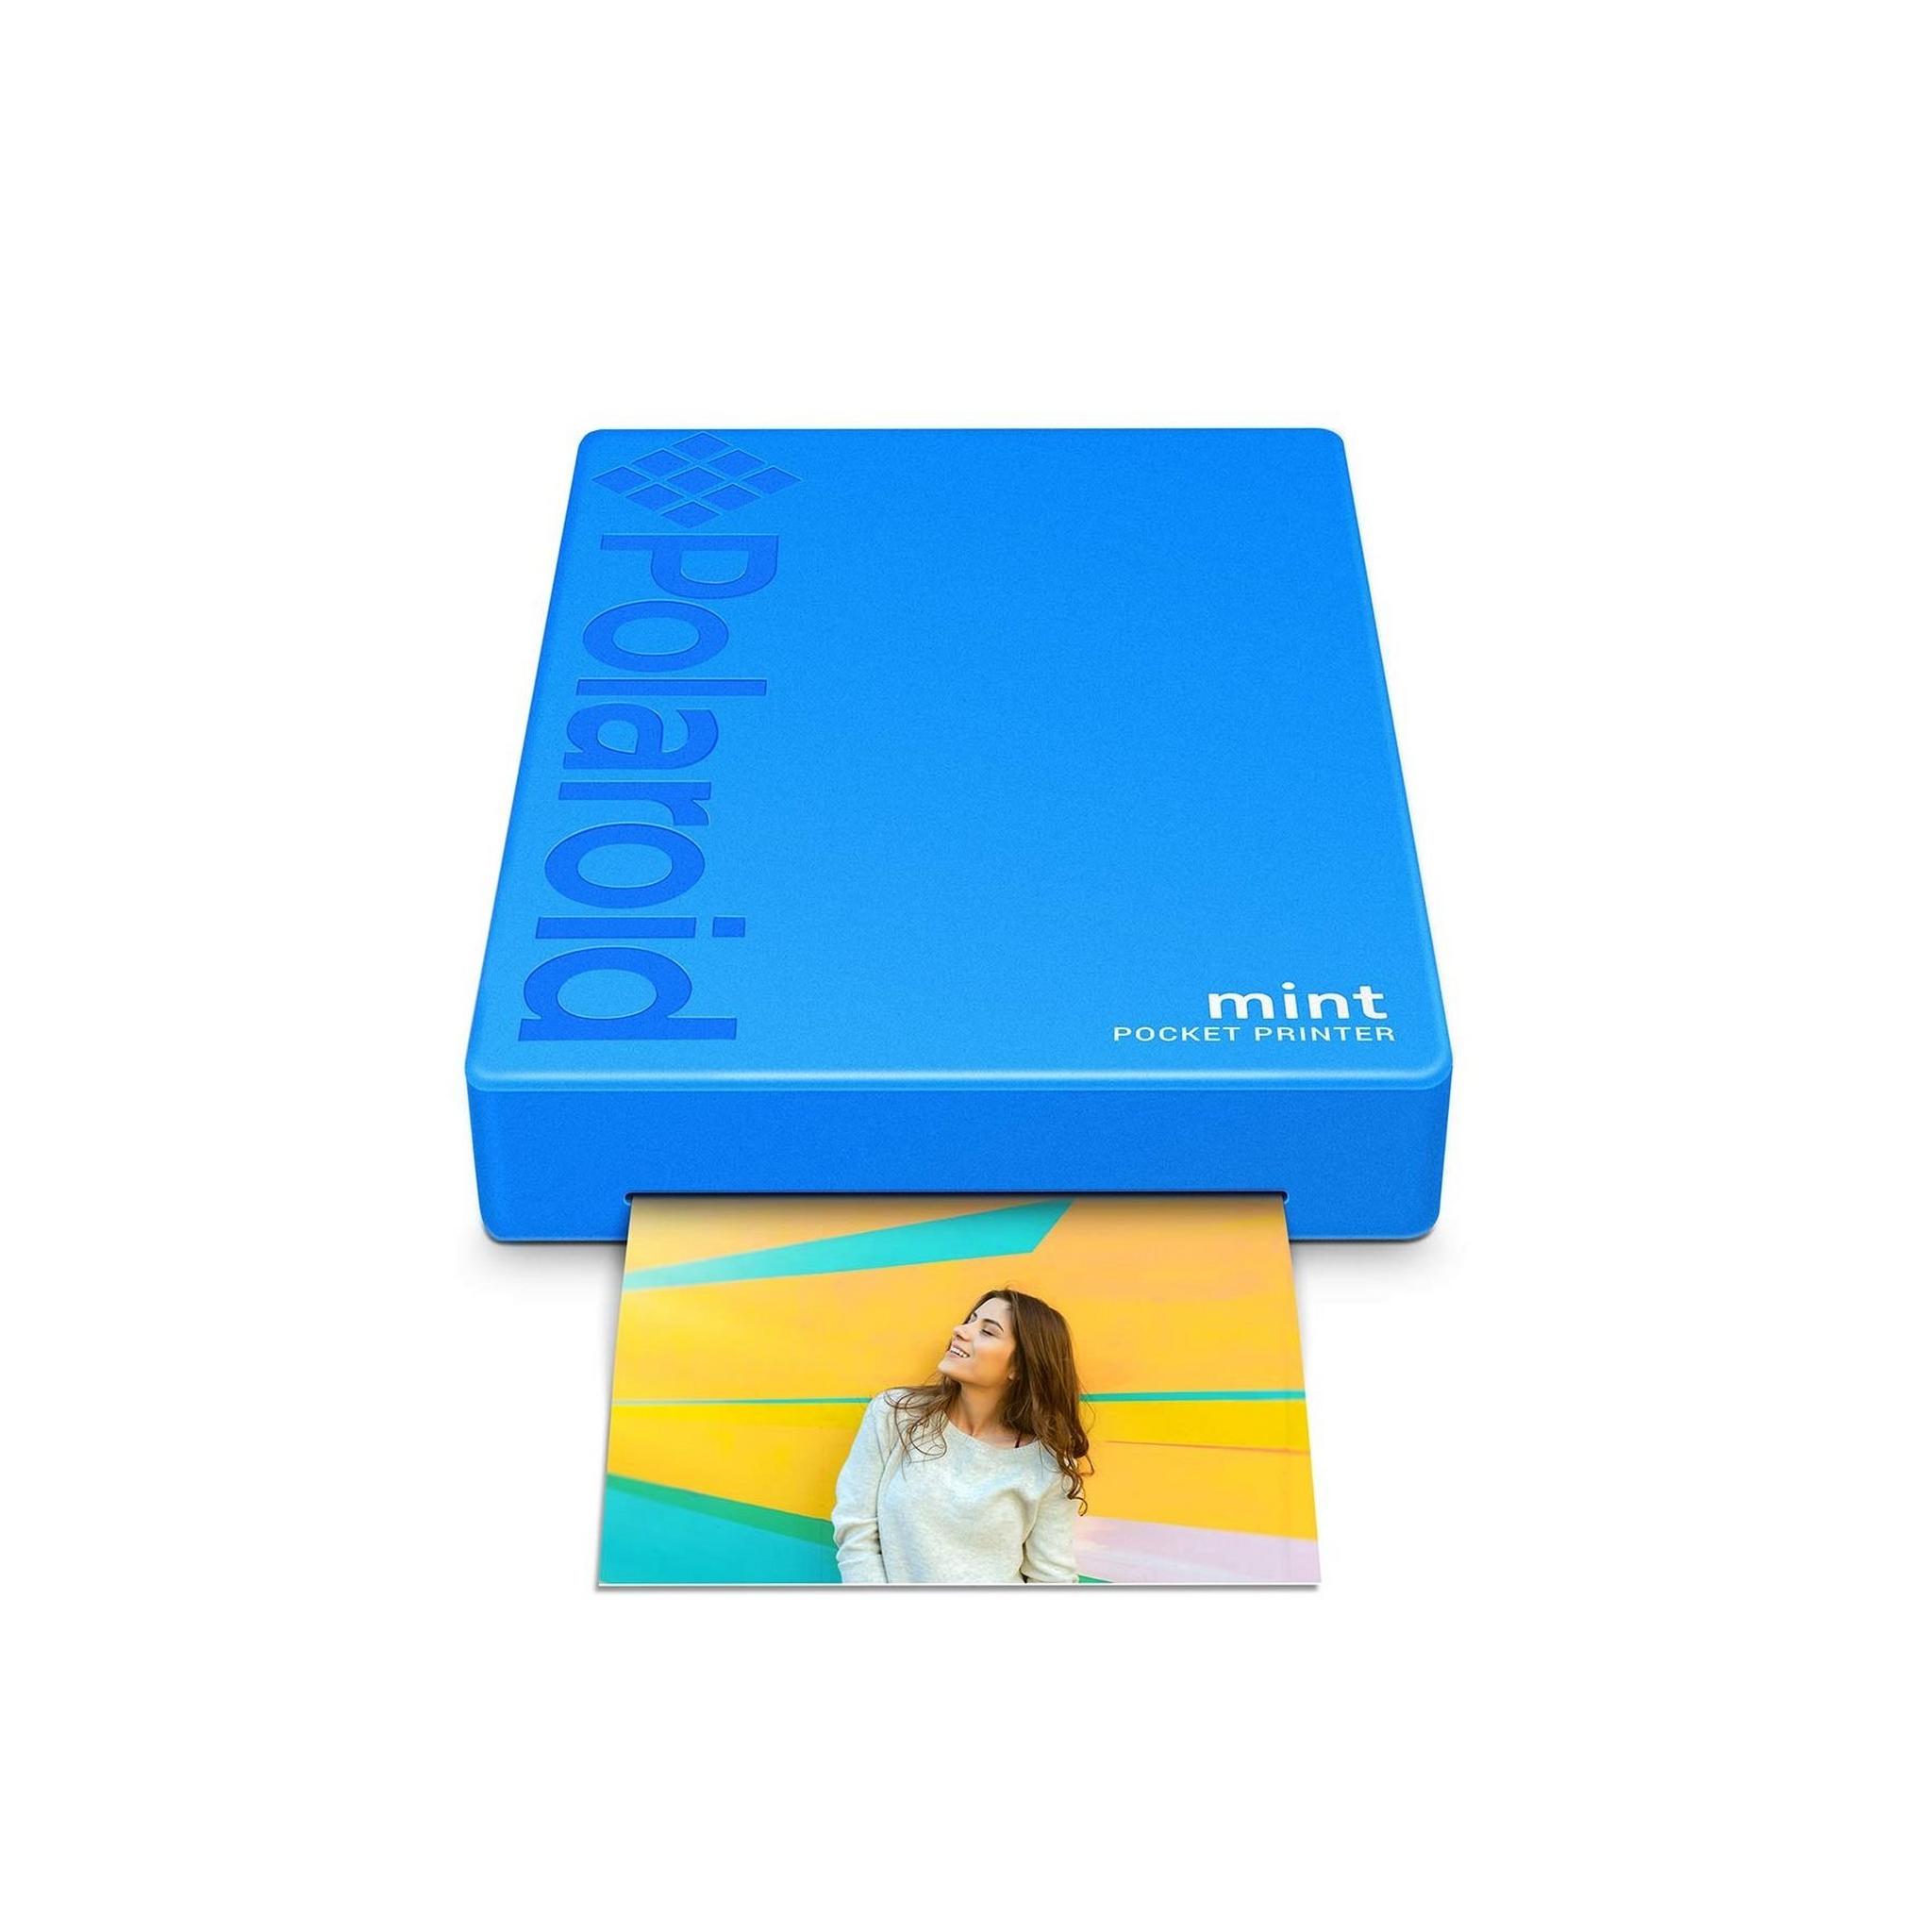 Polaroid Mint Pocket Printer (POLMP02) - Blue